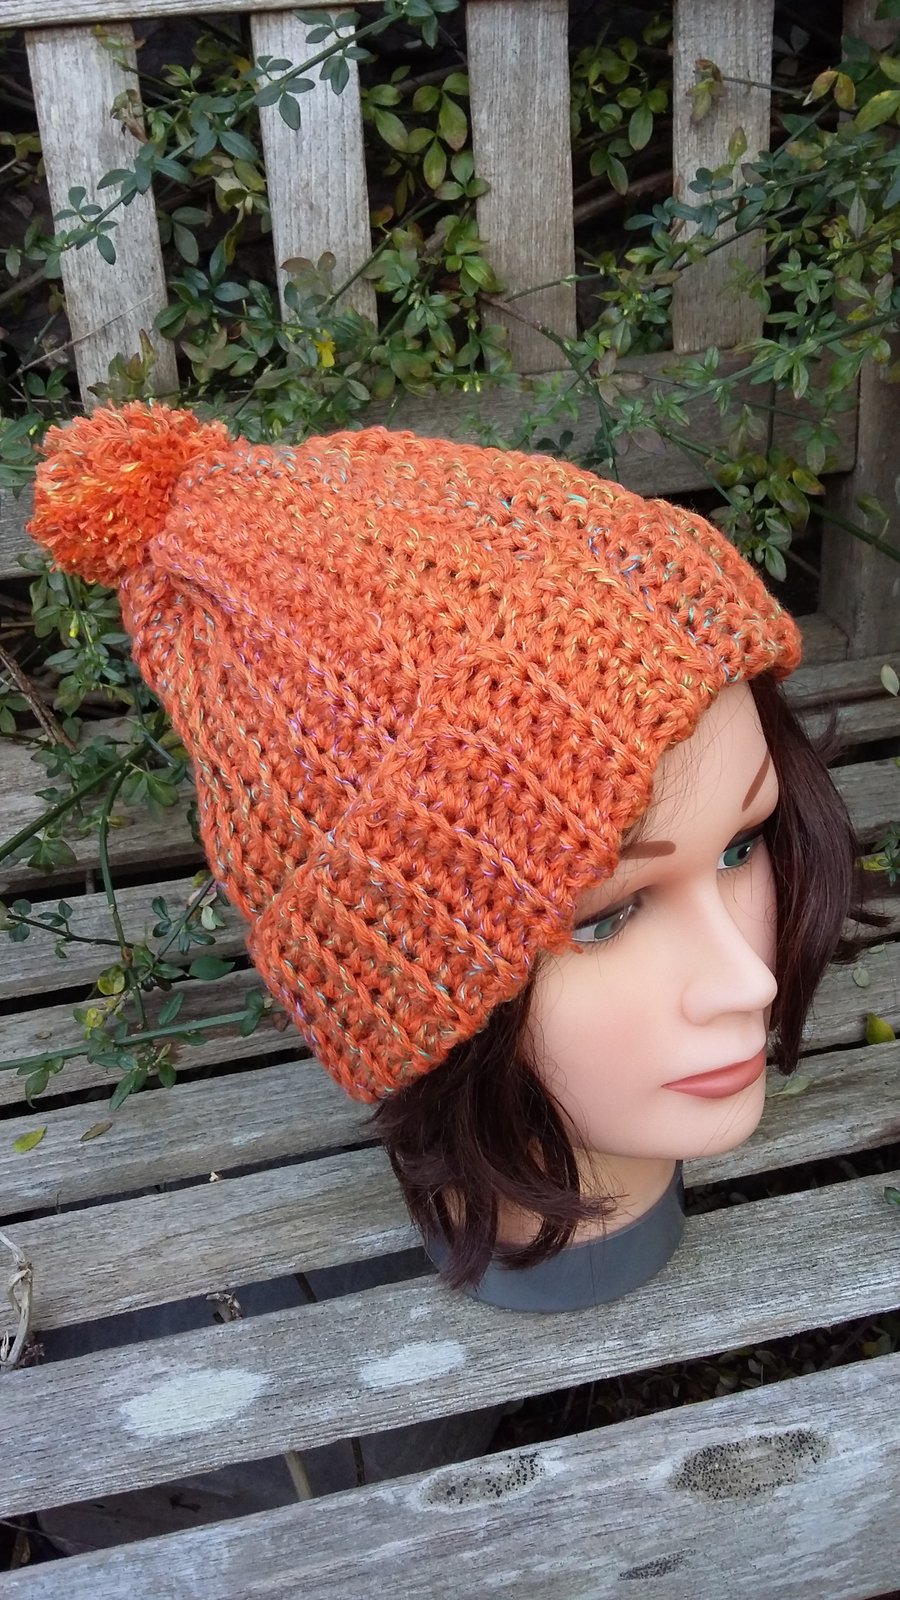 Crochet Rib Effect bobble hat in orange mottly yarn Seconds Sunday